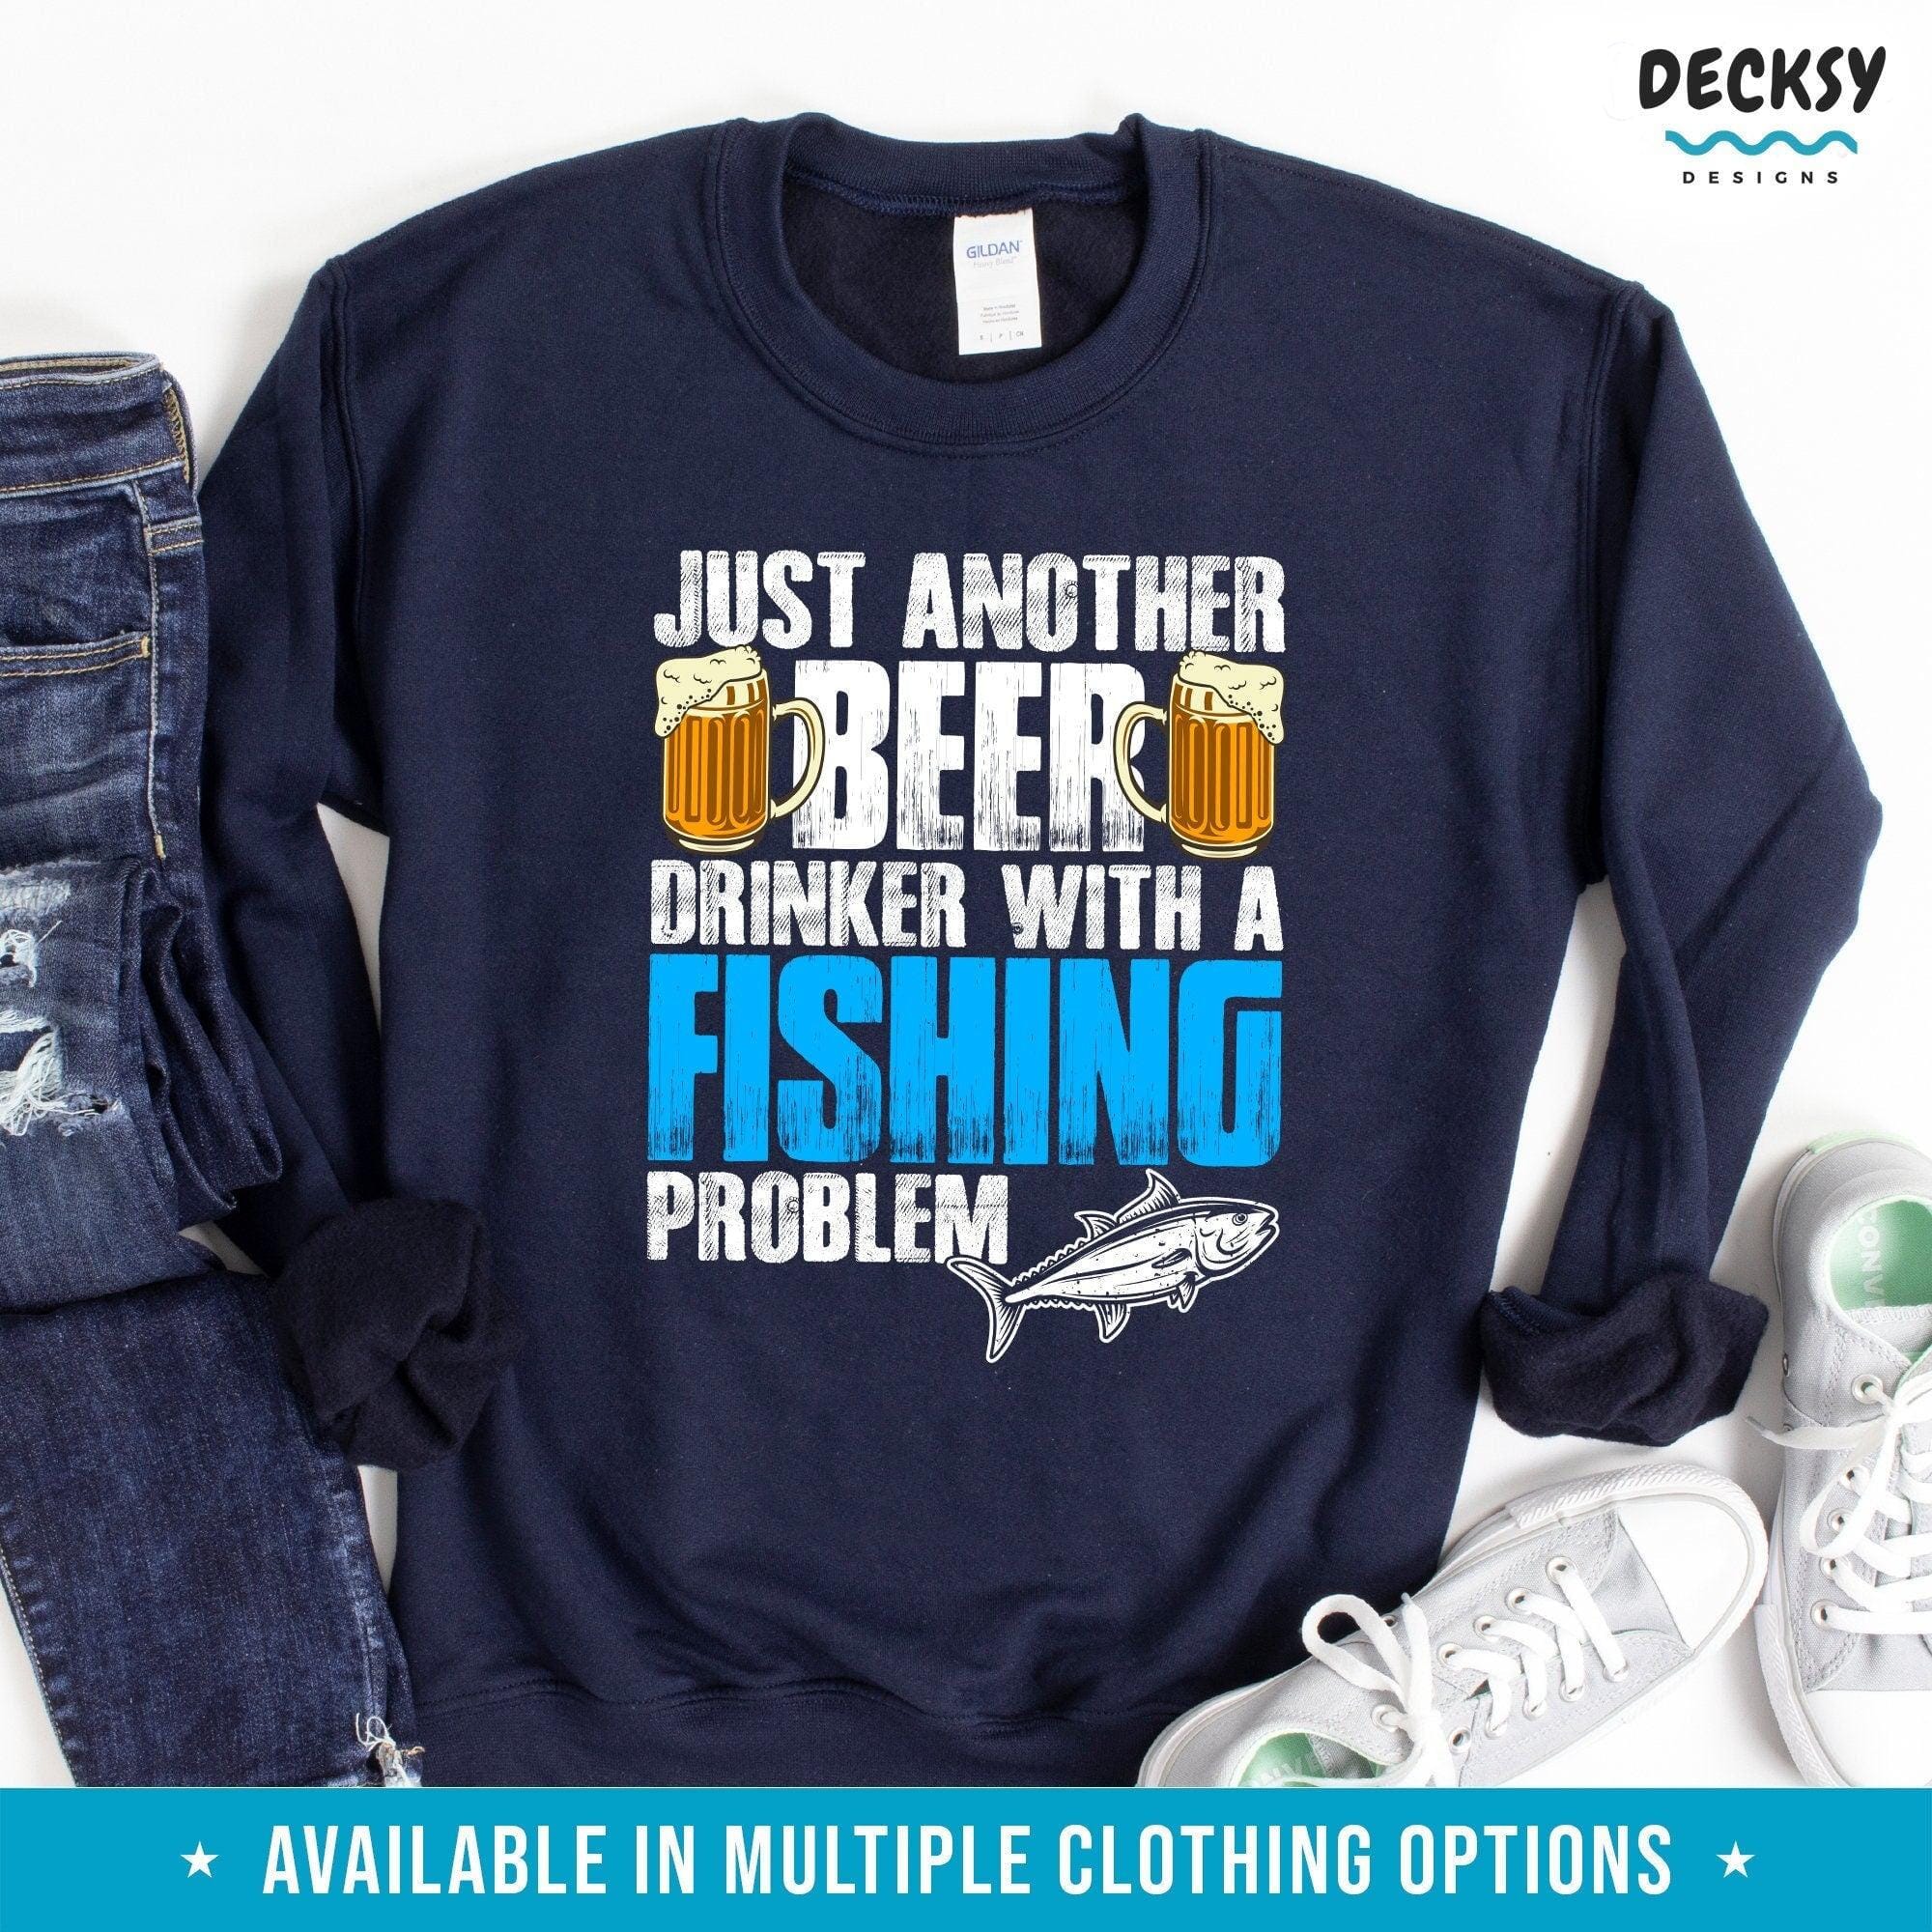 Fishing Shirt, Fisherman Gift-Clothing:Gender-Neutral Adult Clothing:Tops & Tees:T-shirts:Graphic Tees-DecksyDesigns